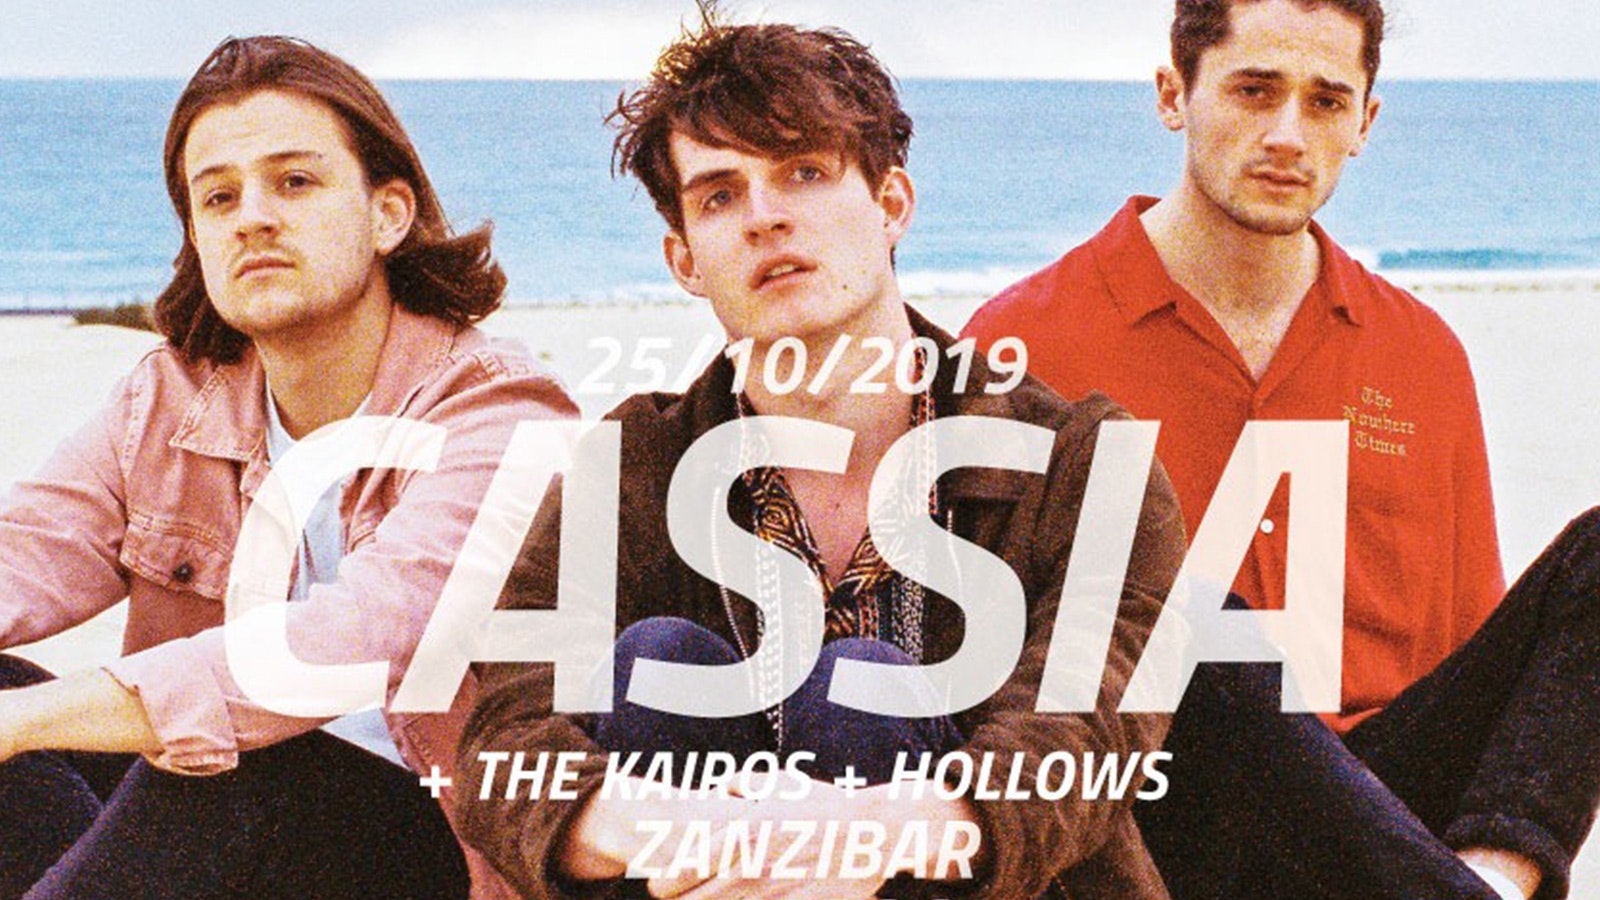 Cassia – Zanzibar,Liverpool -25/10/19